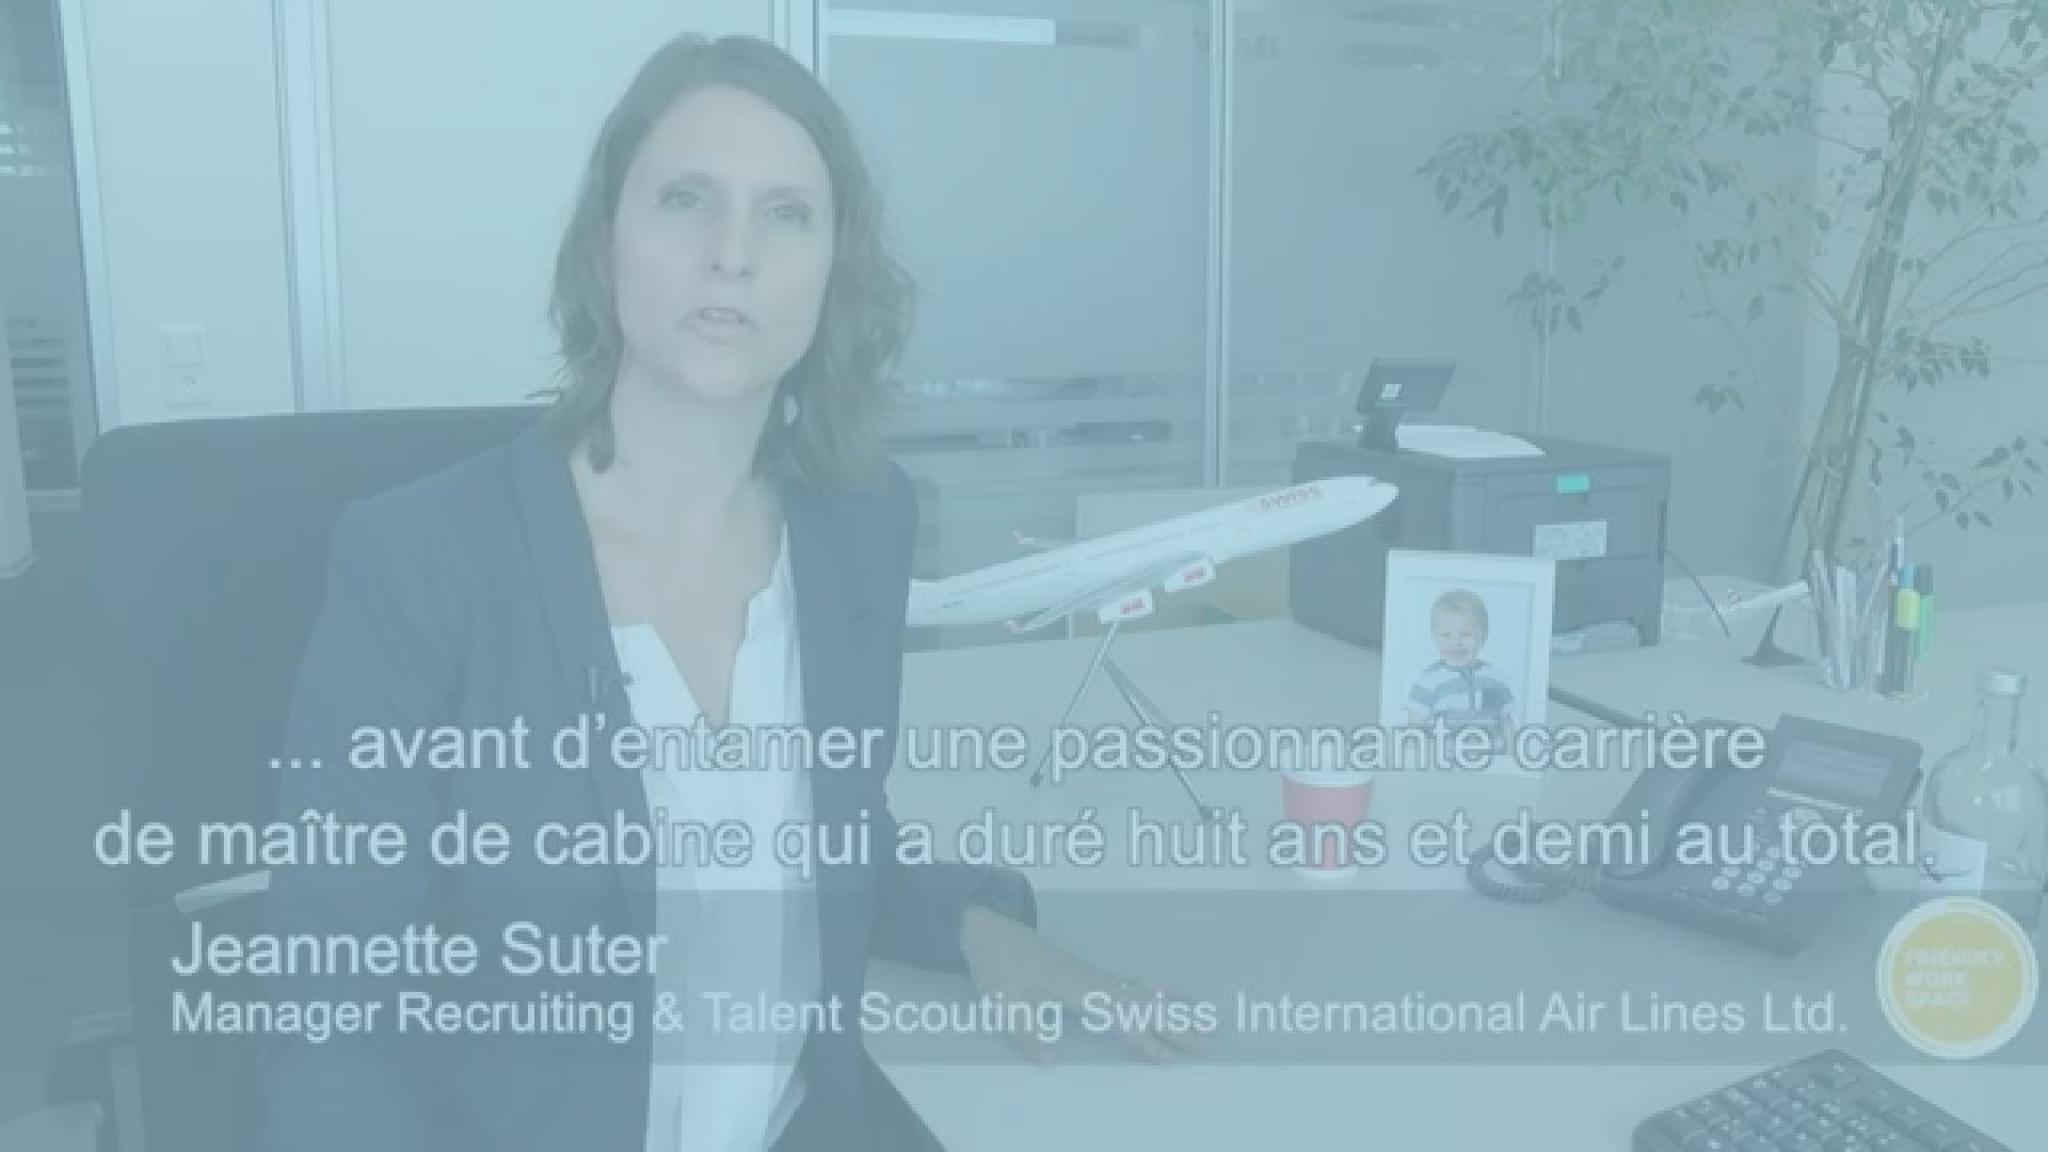 Jeannette Suter, Swiss International Air Lines Ltd.